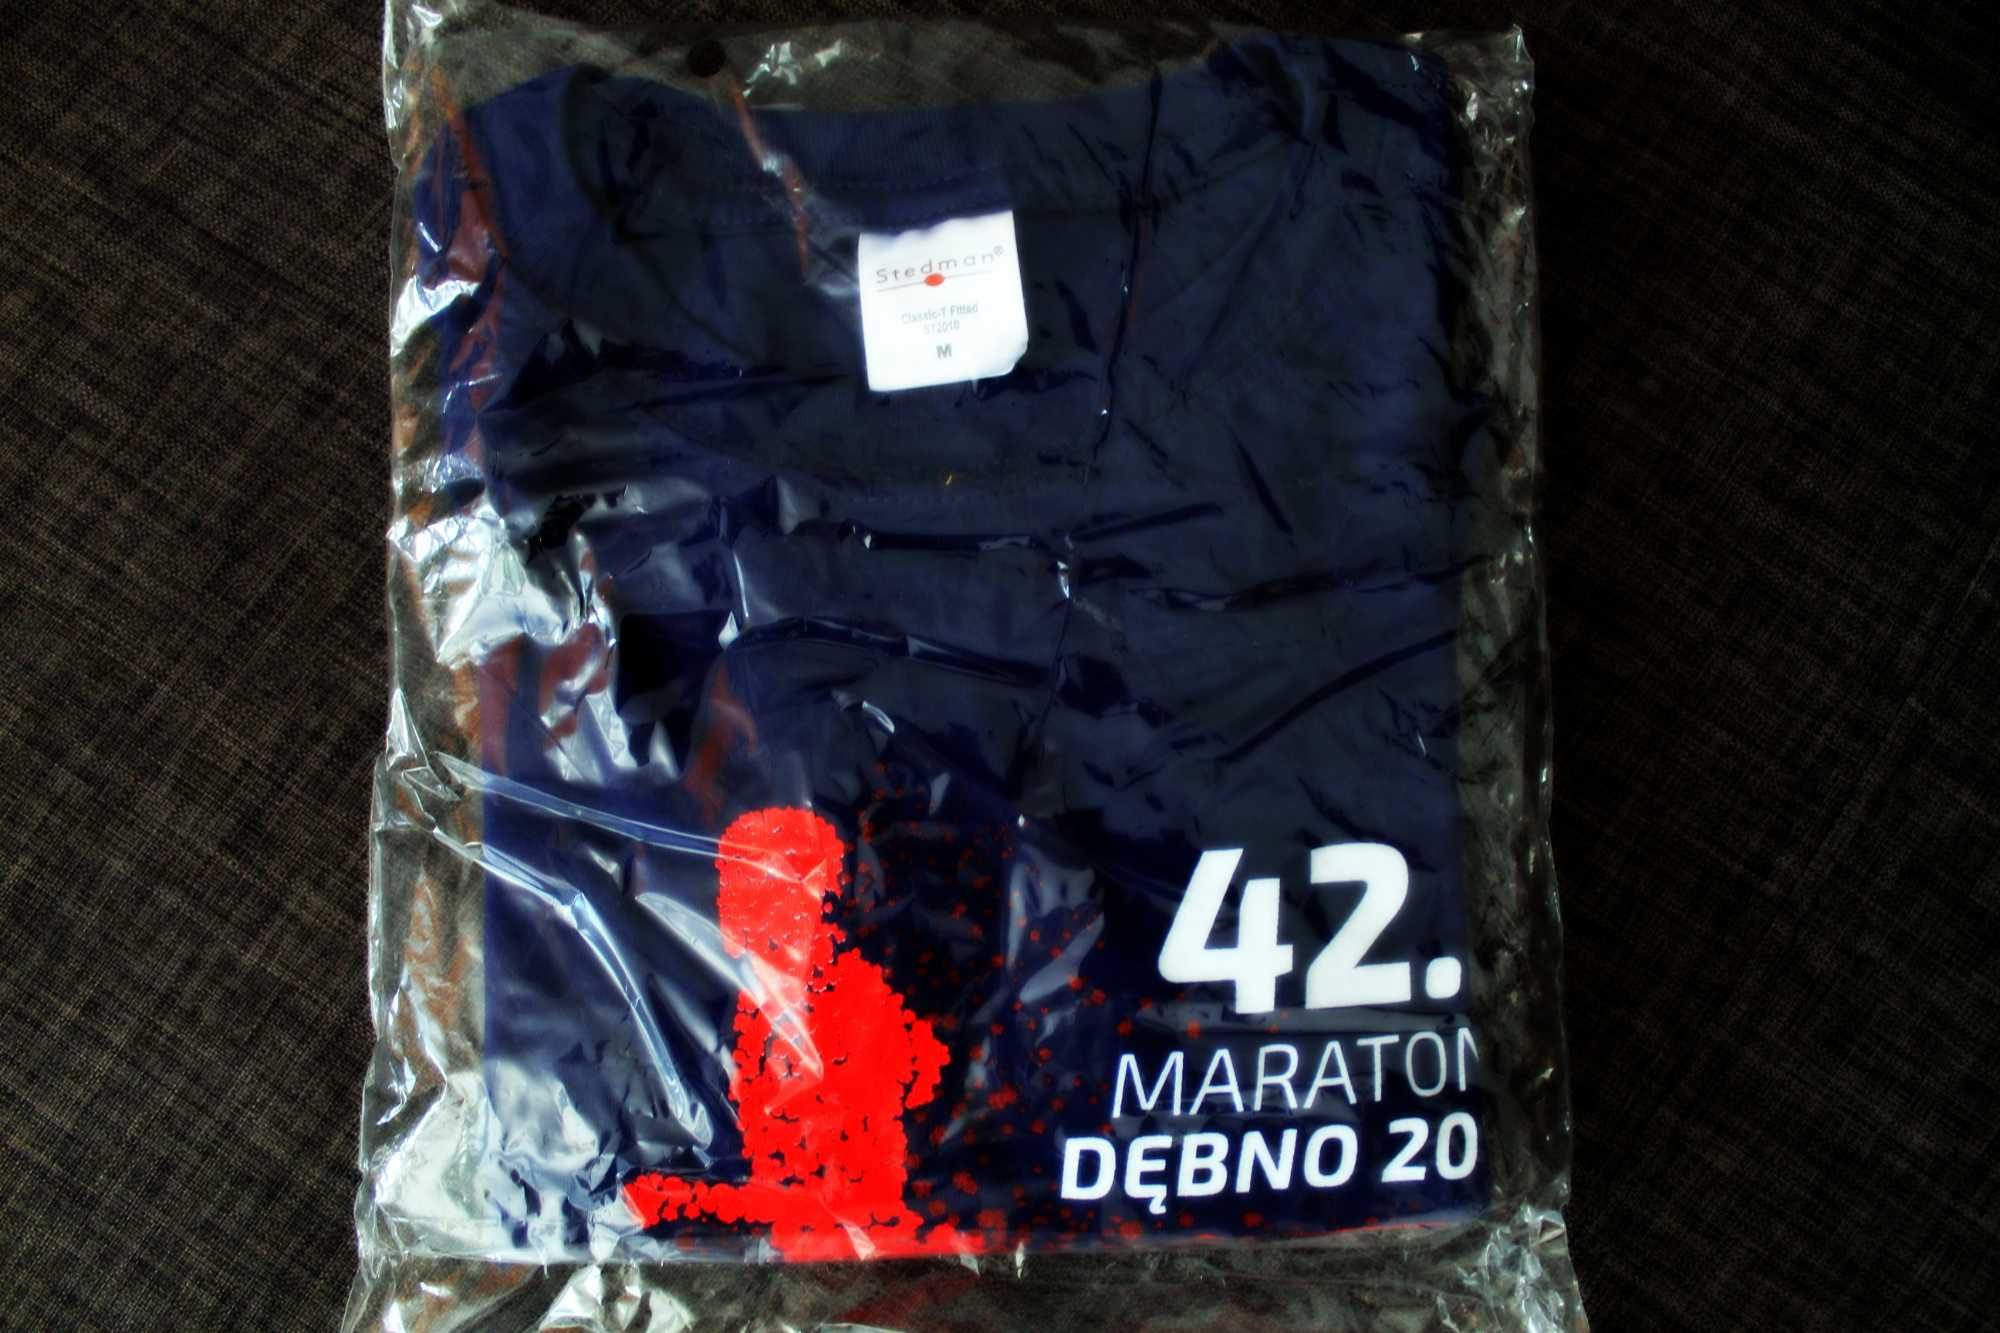 Koszulka 42. Dębno Maraton. Nowa - folia